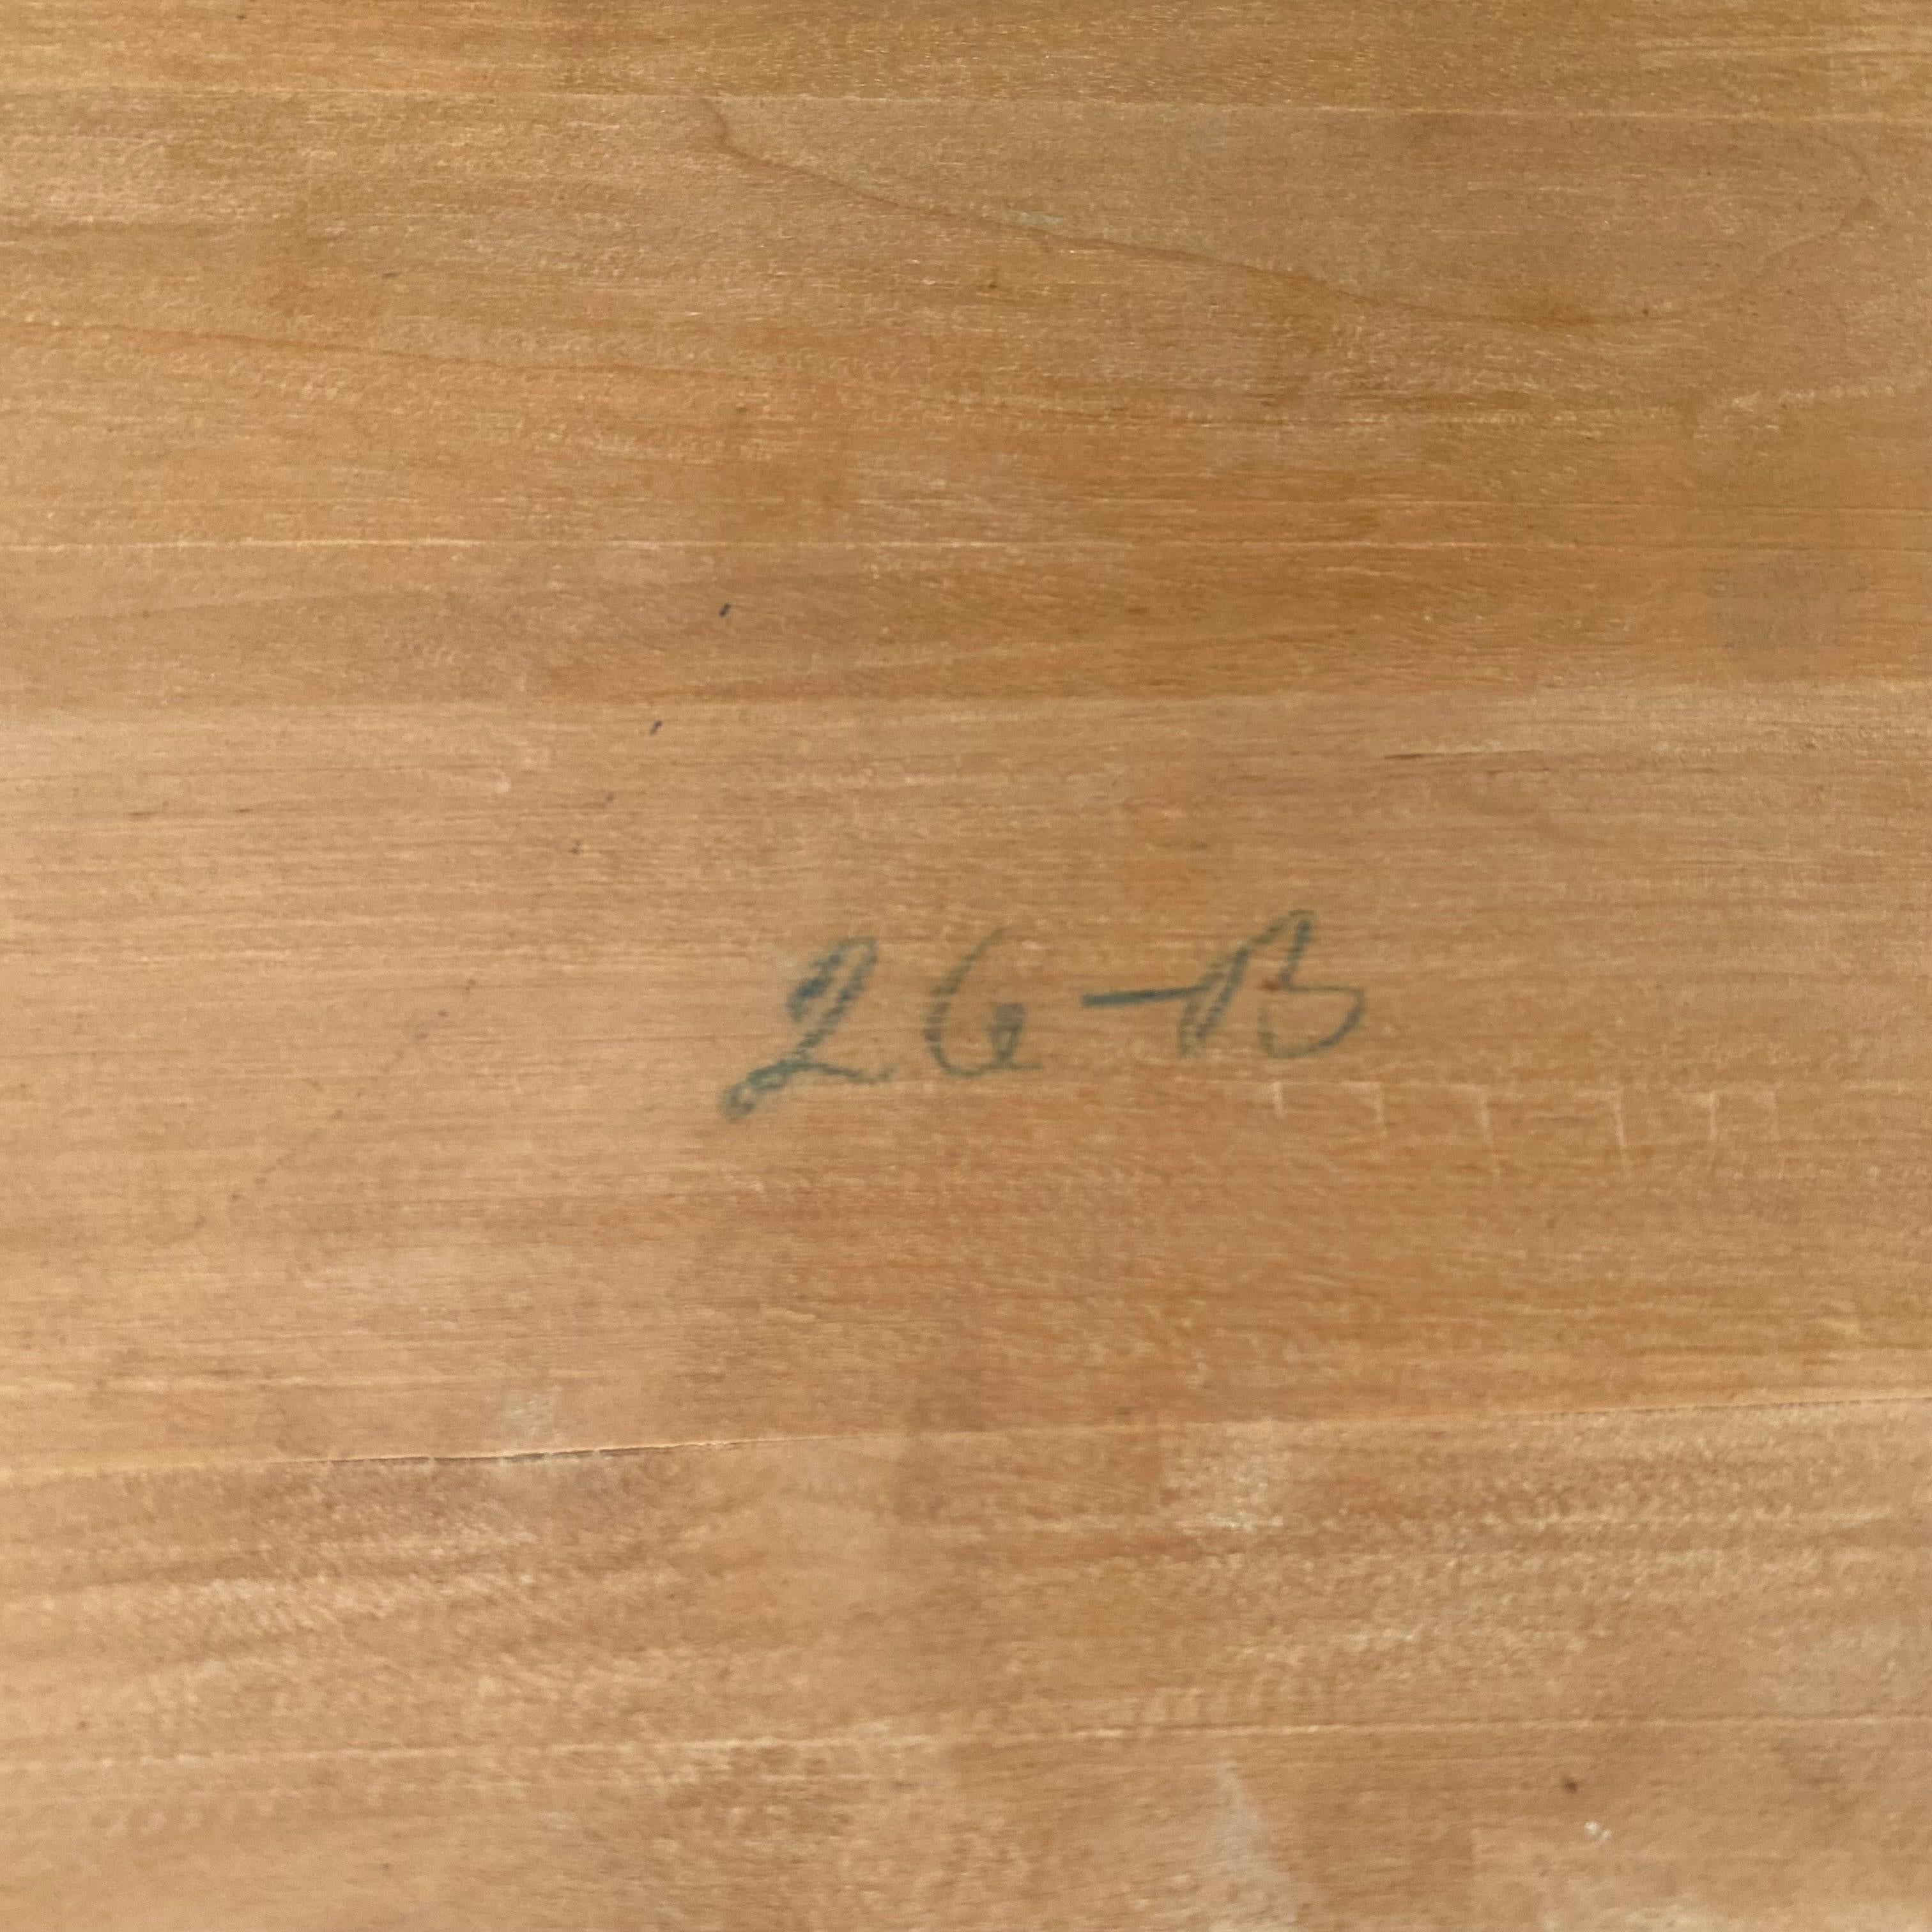 Bentwood modernist side table by Gemla Fabriker, Sweden, 1930s For Sale 1